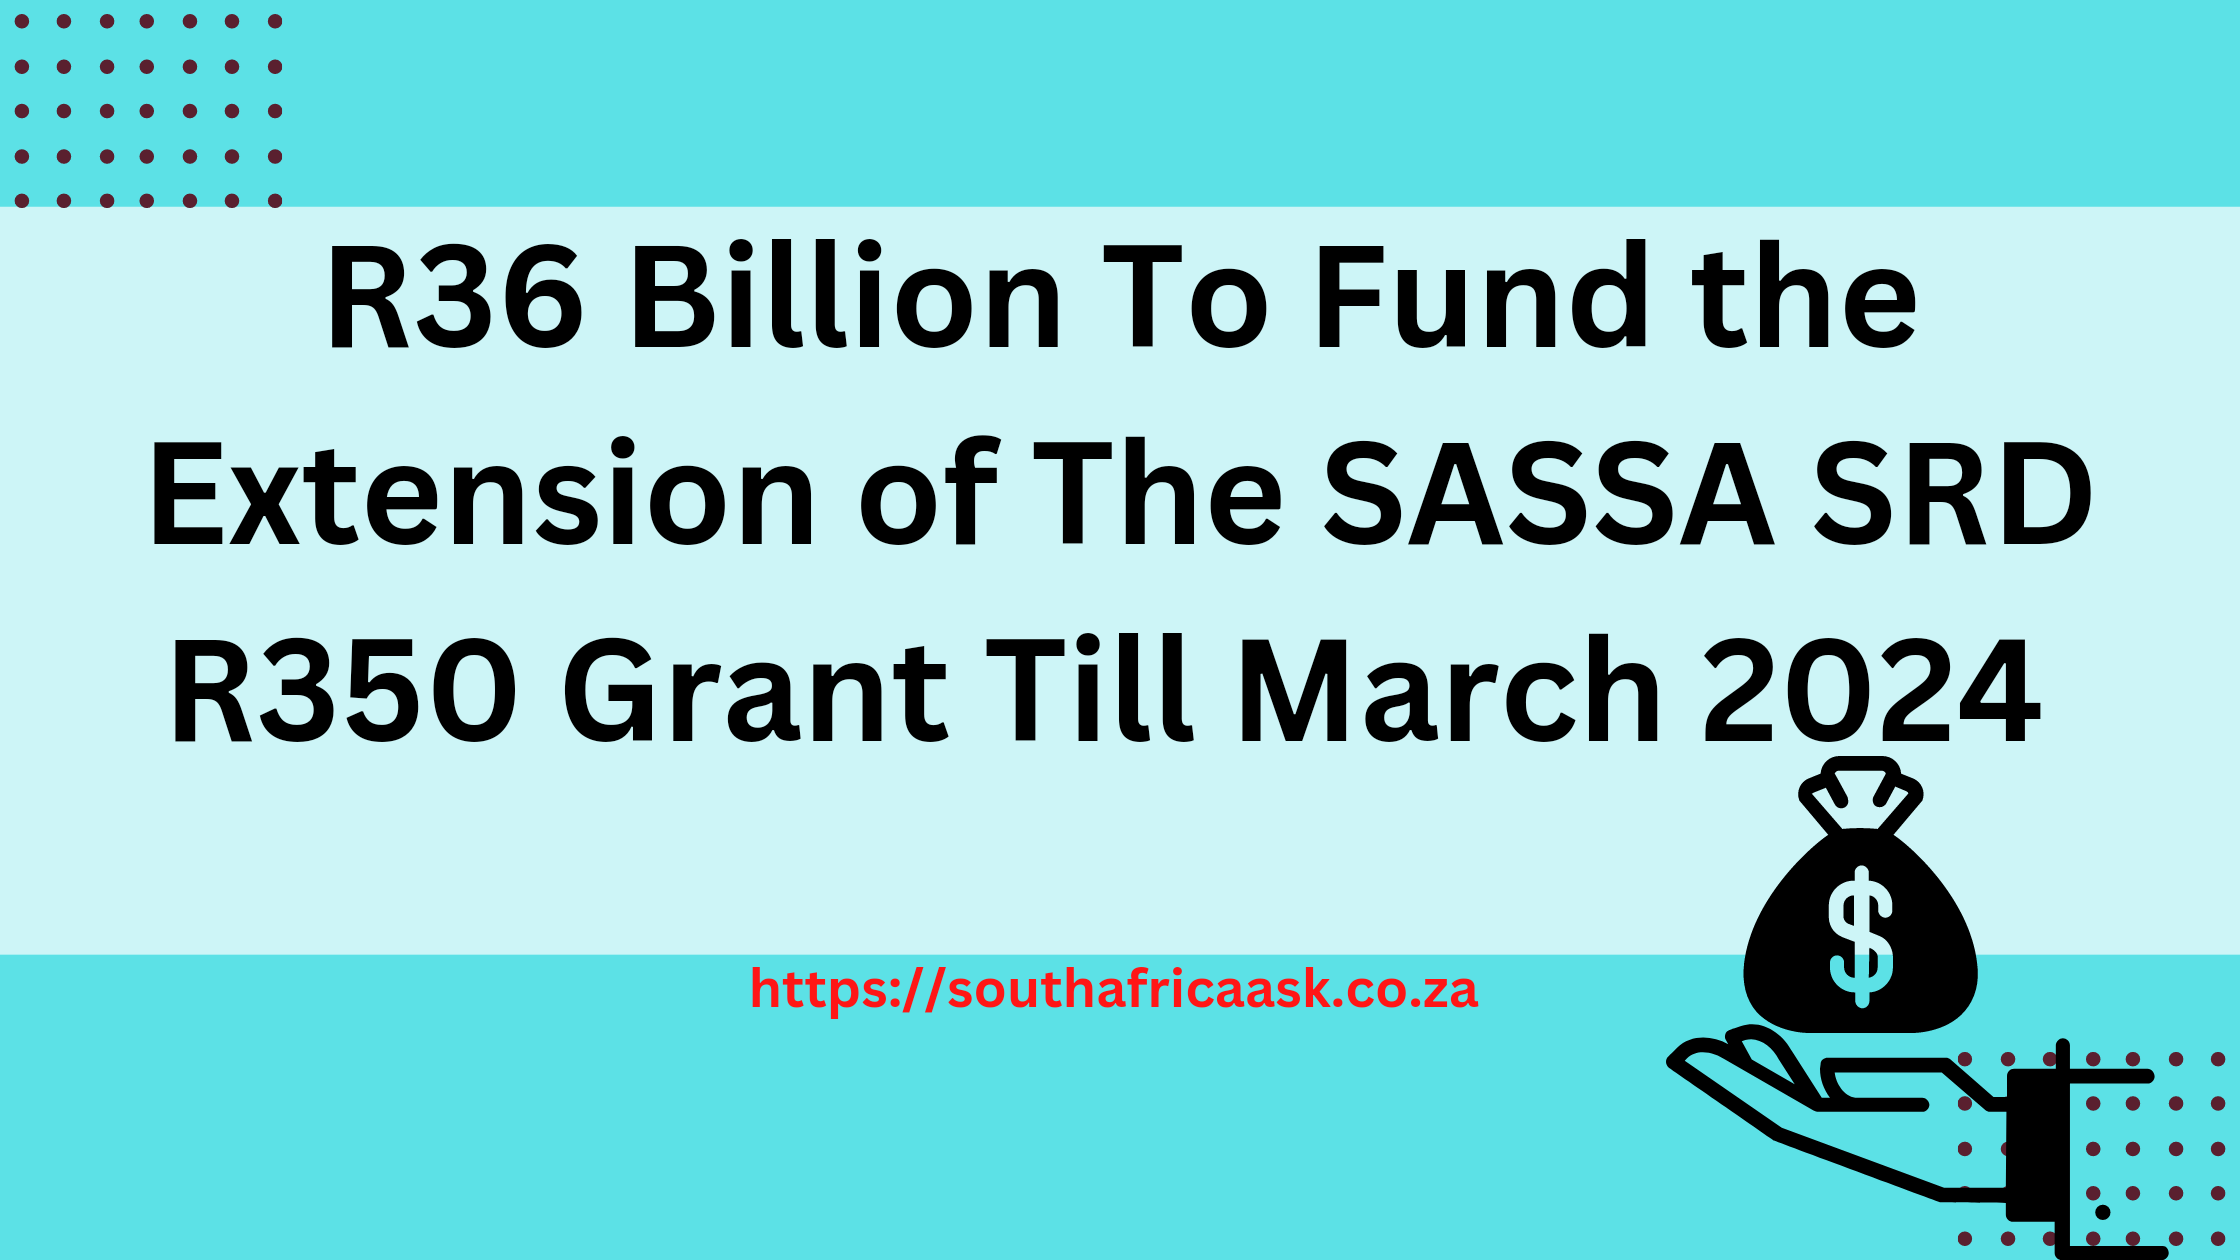 R36 Billion To Fund the Extension of The SASSA SRD R350 Grant Till March 2024